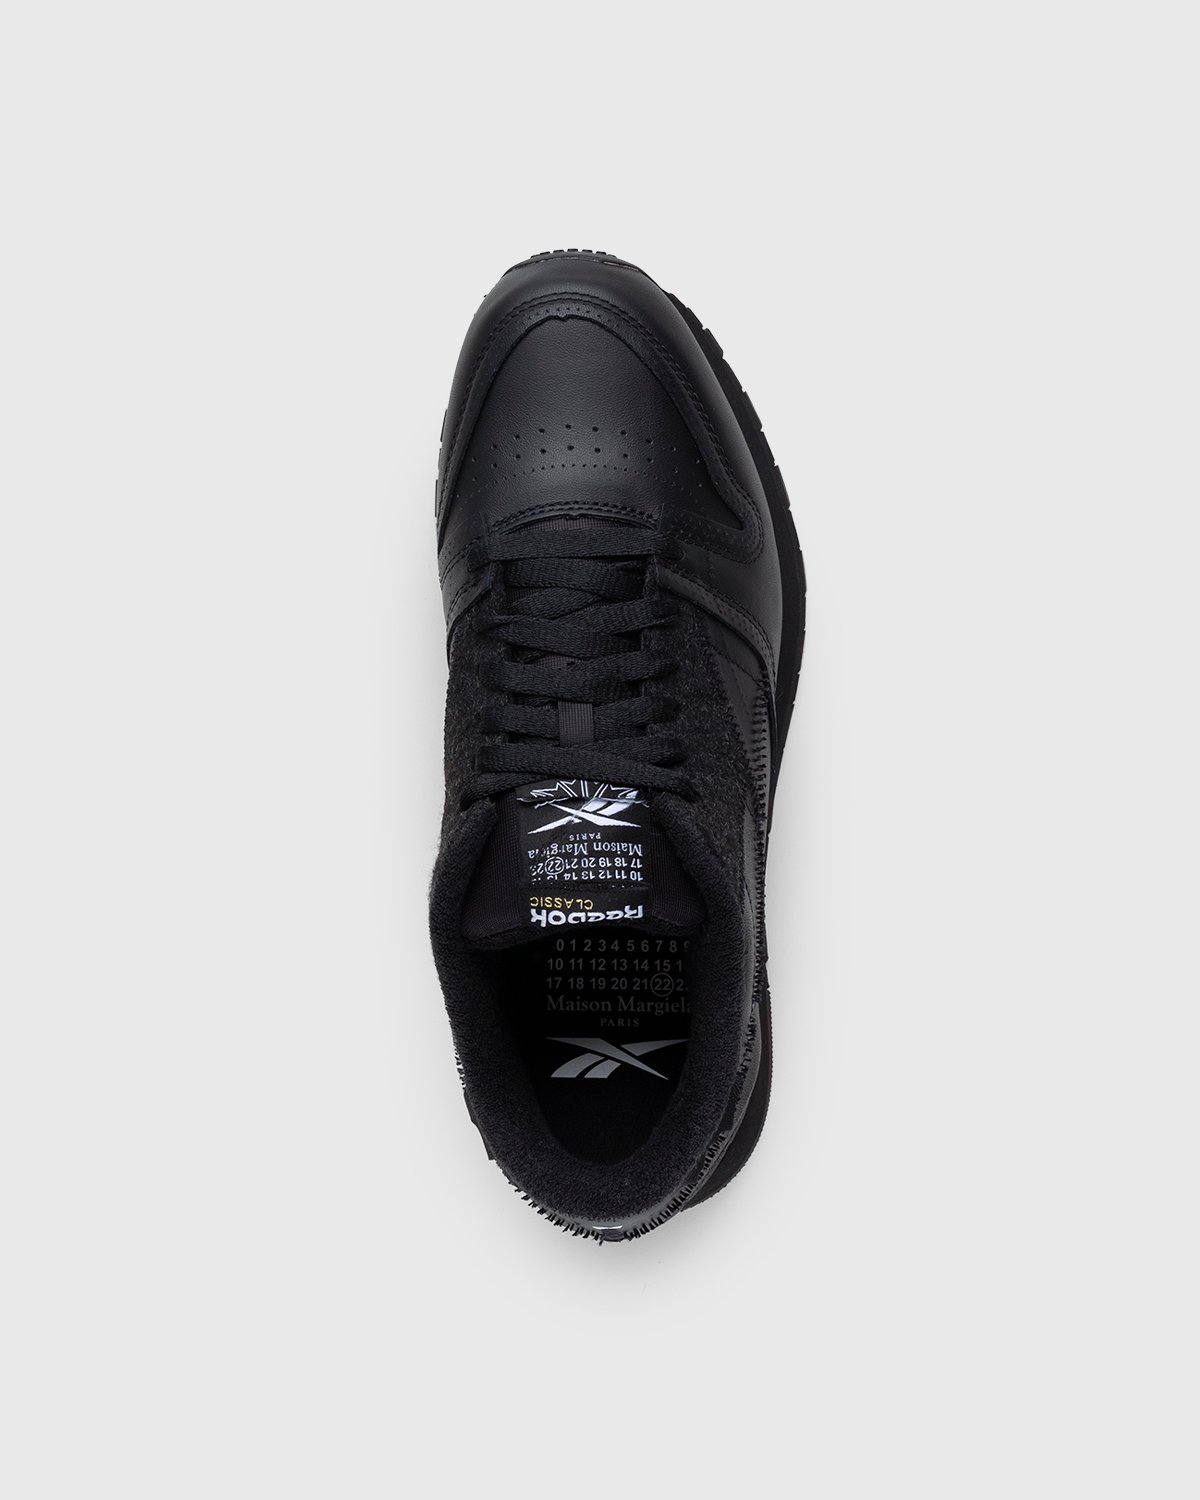 Maison Margiela x Reebok - Classic Leather Memory Of Black/Footwear White/Black - Footwear - Black - Image 3